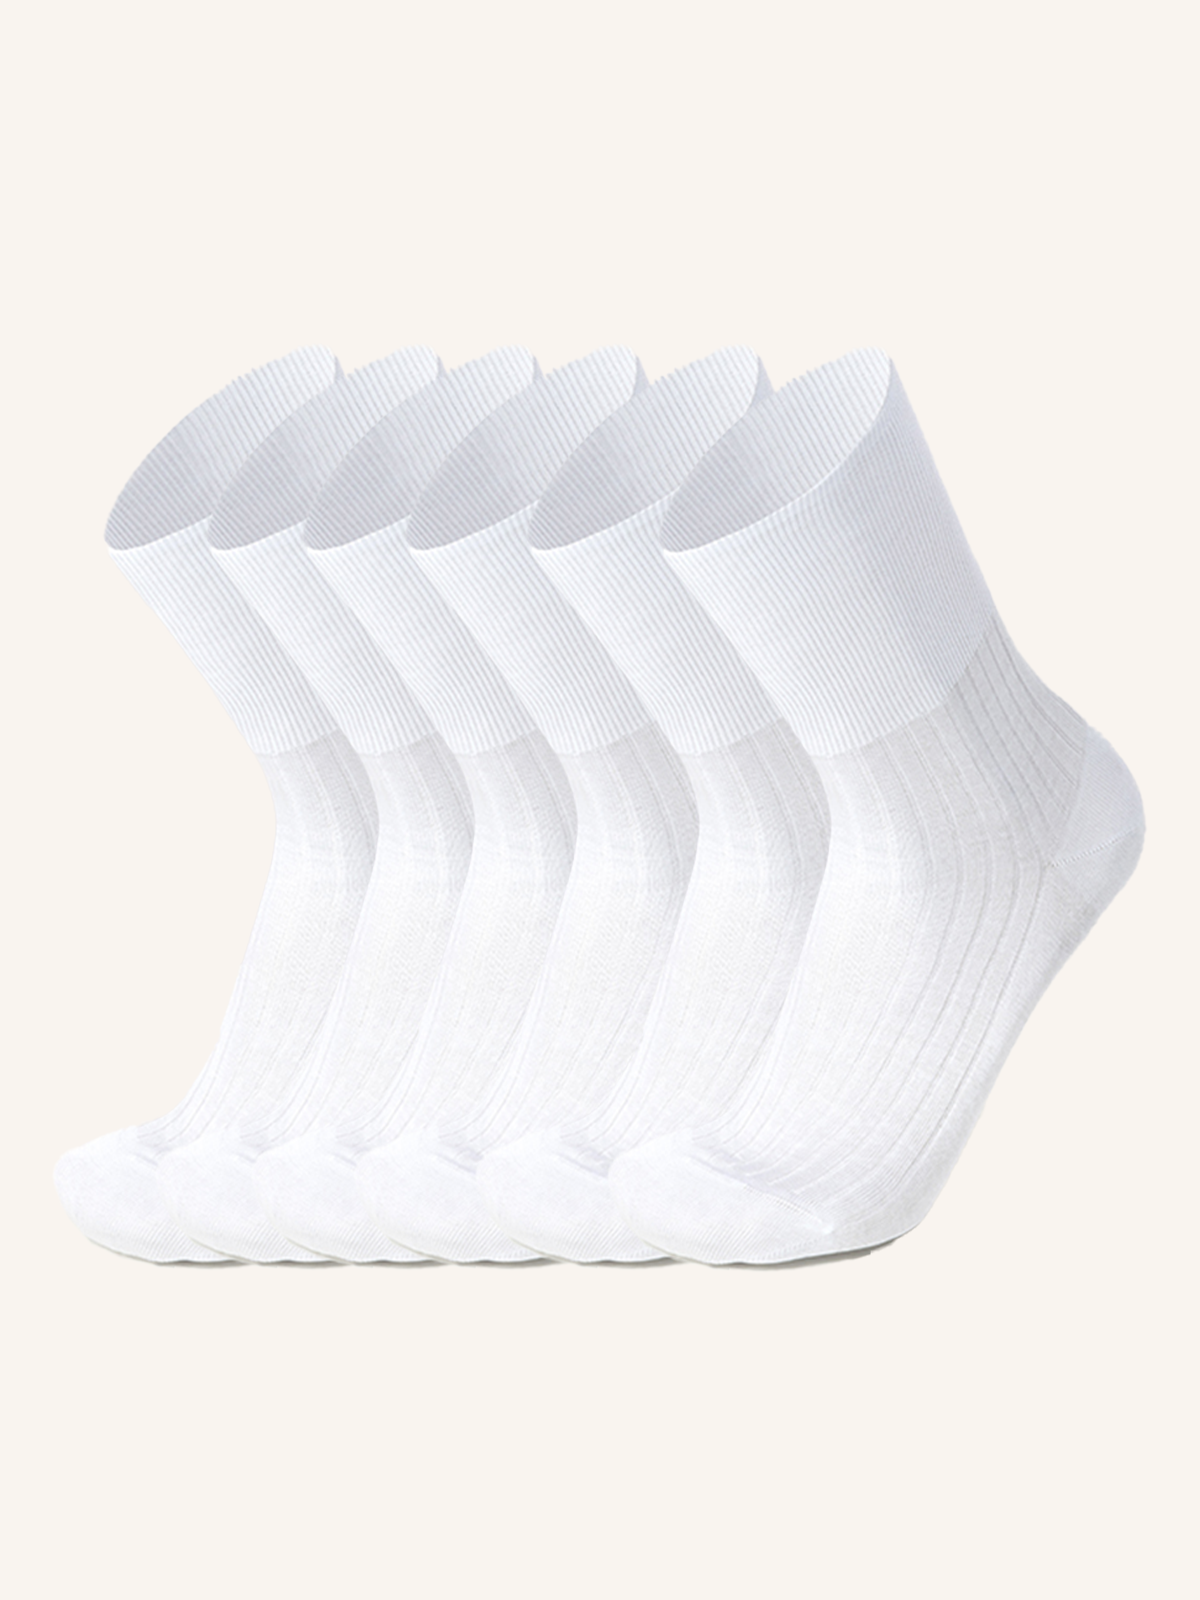 Short Sanitary Sock in Cotton for Men | Pack of 6 pairs | Sanital CC